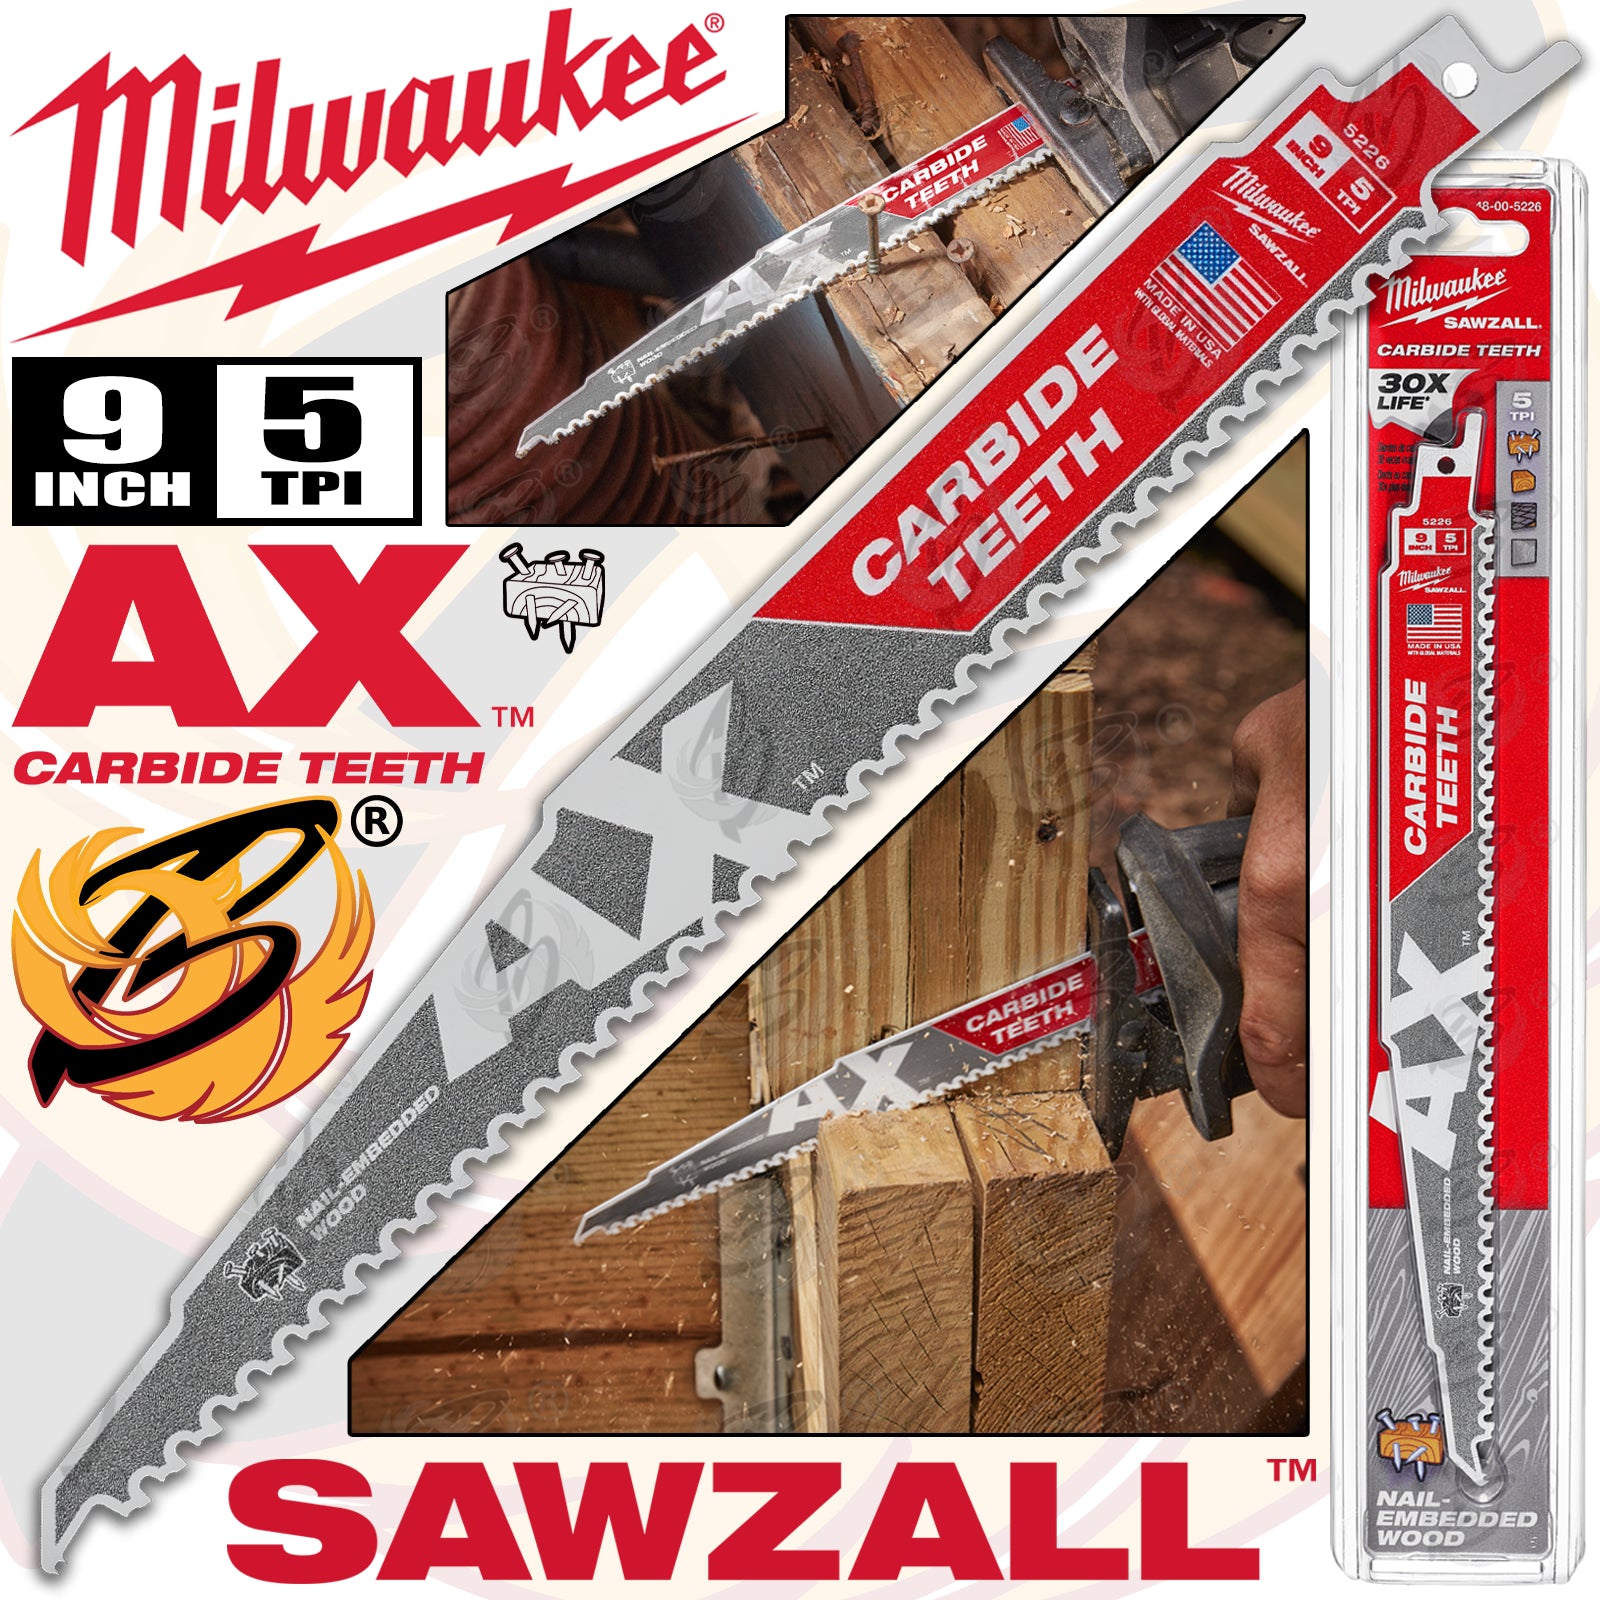 MILWAUKEE SAWZALL RECIPROCATING SAW BLADE 230mm x 5TPI TCT WOOD SAW BLADES ( THE AX )